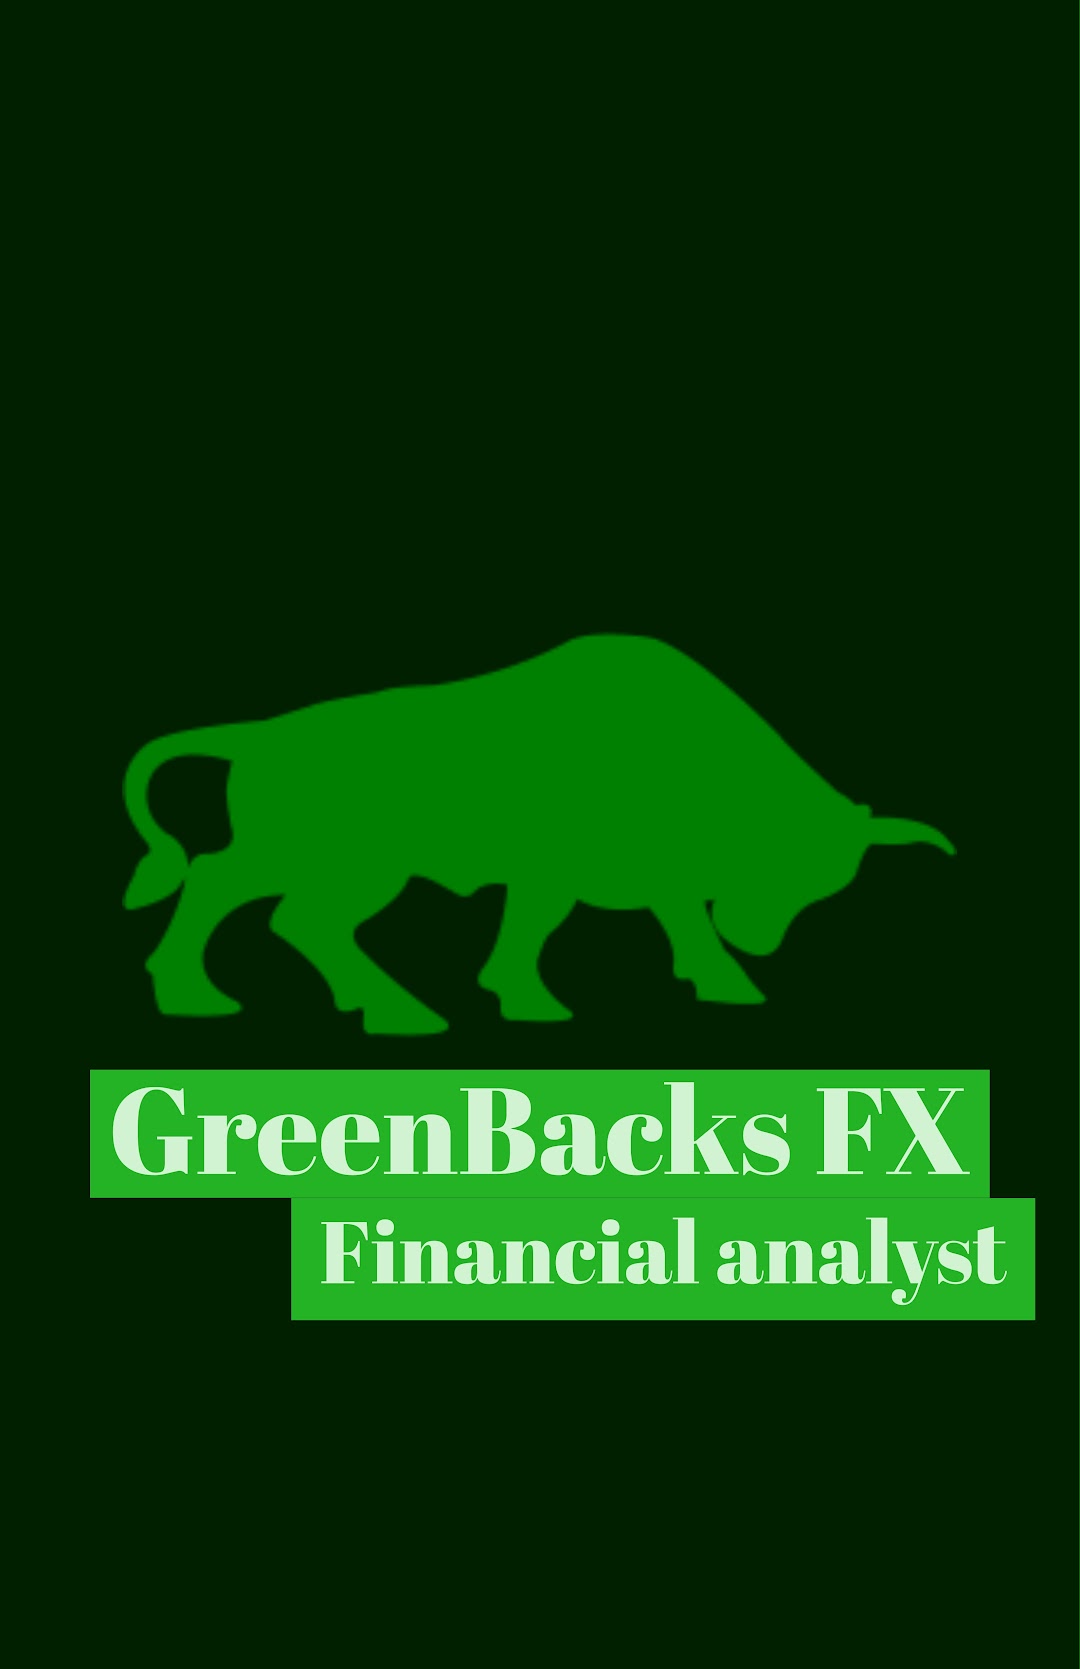 Greenback FX